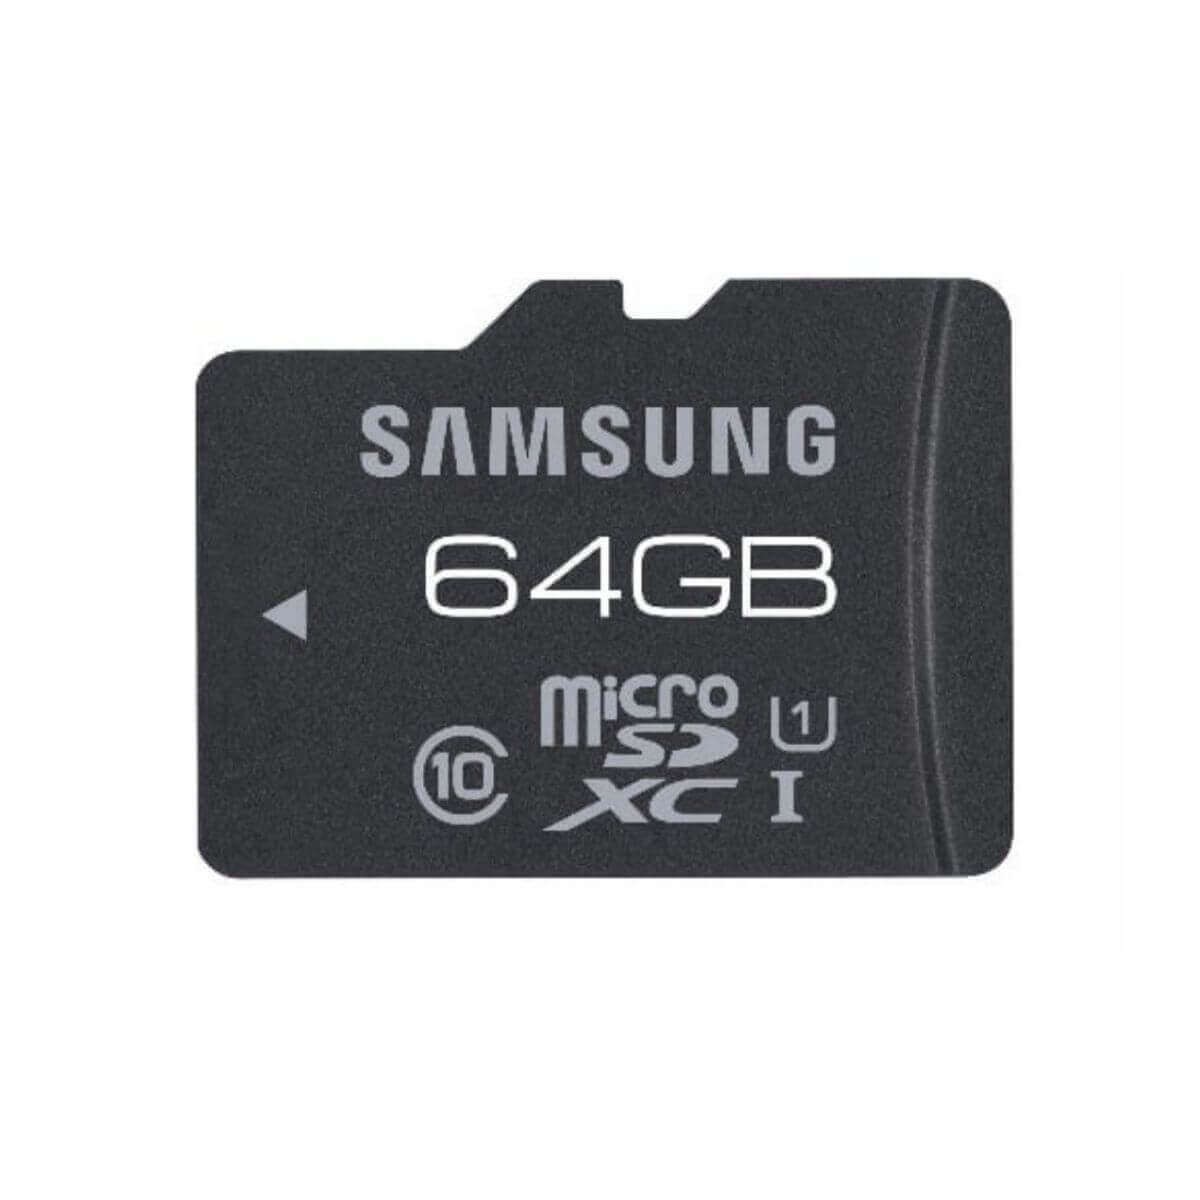 Samsung 64GB Memory CardBD